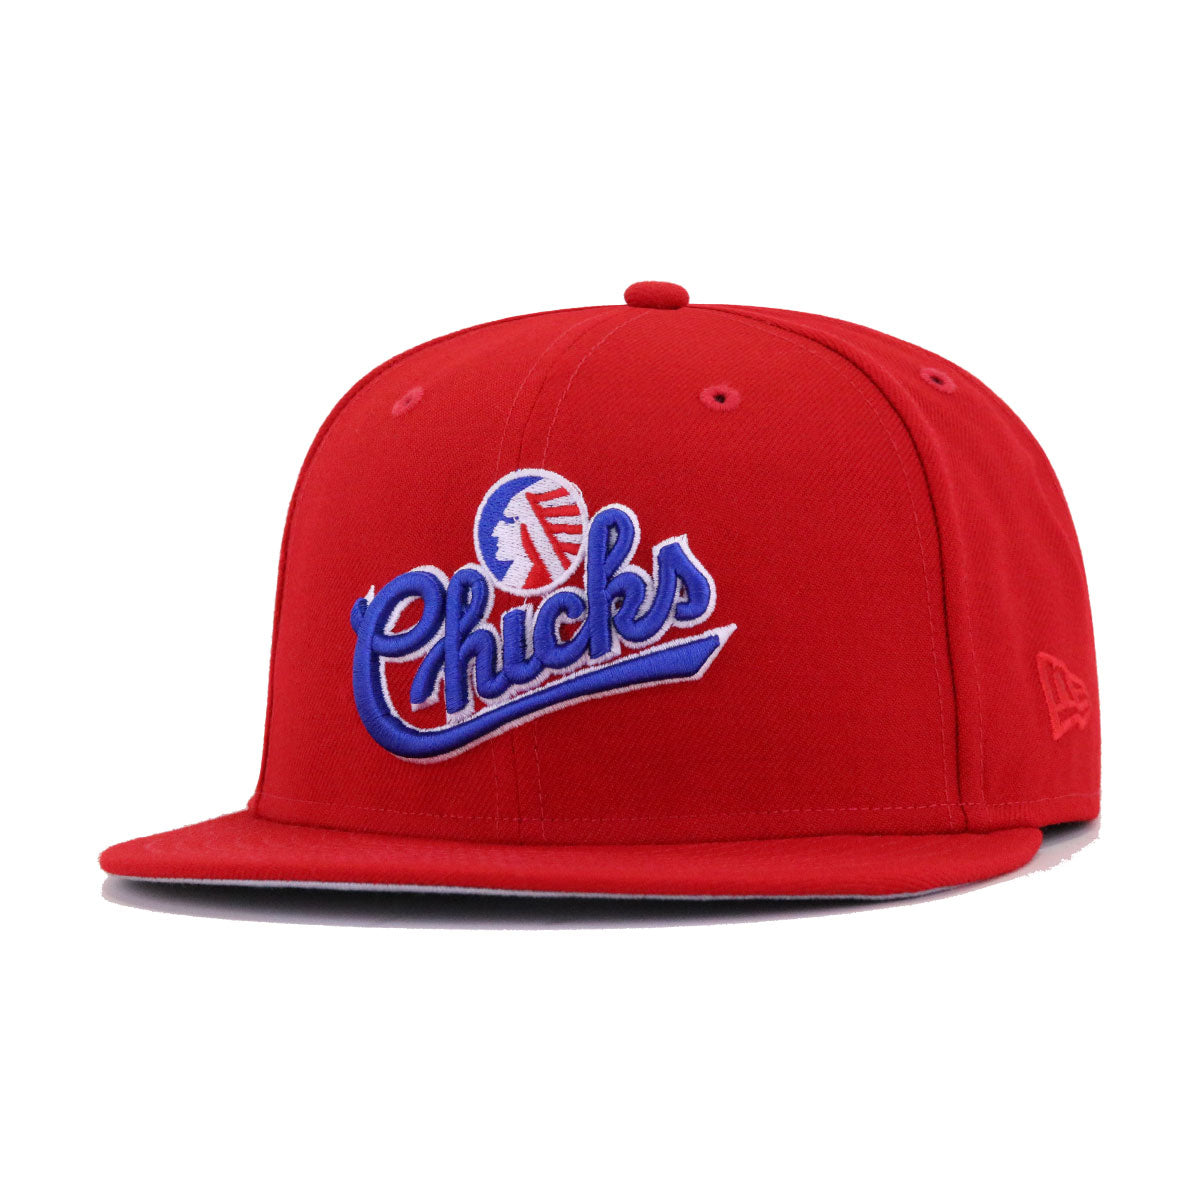 New Era Memphis Chicks Minor League Baseball Cap Hat Fitted Size 7 3/8